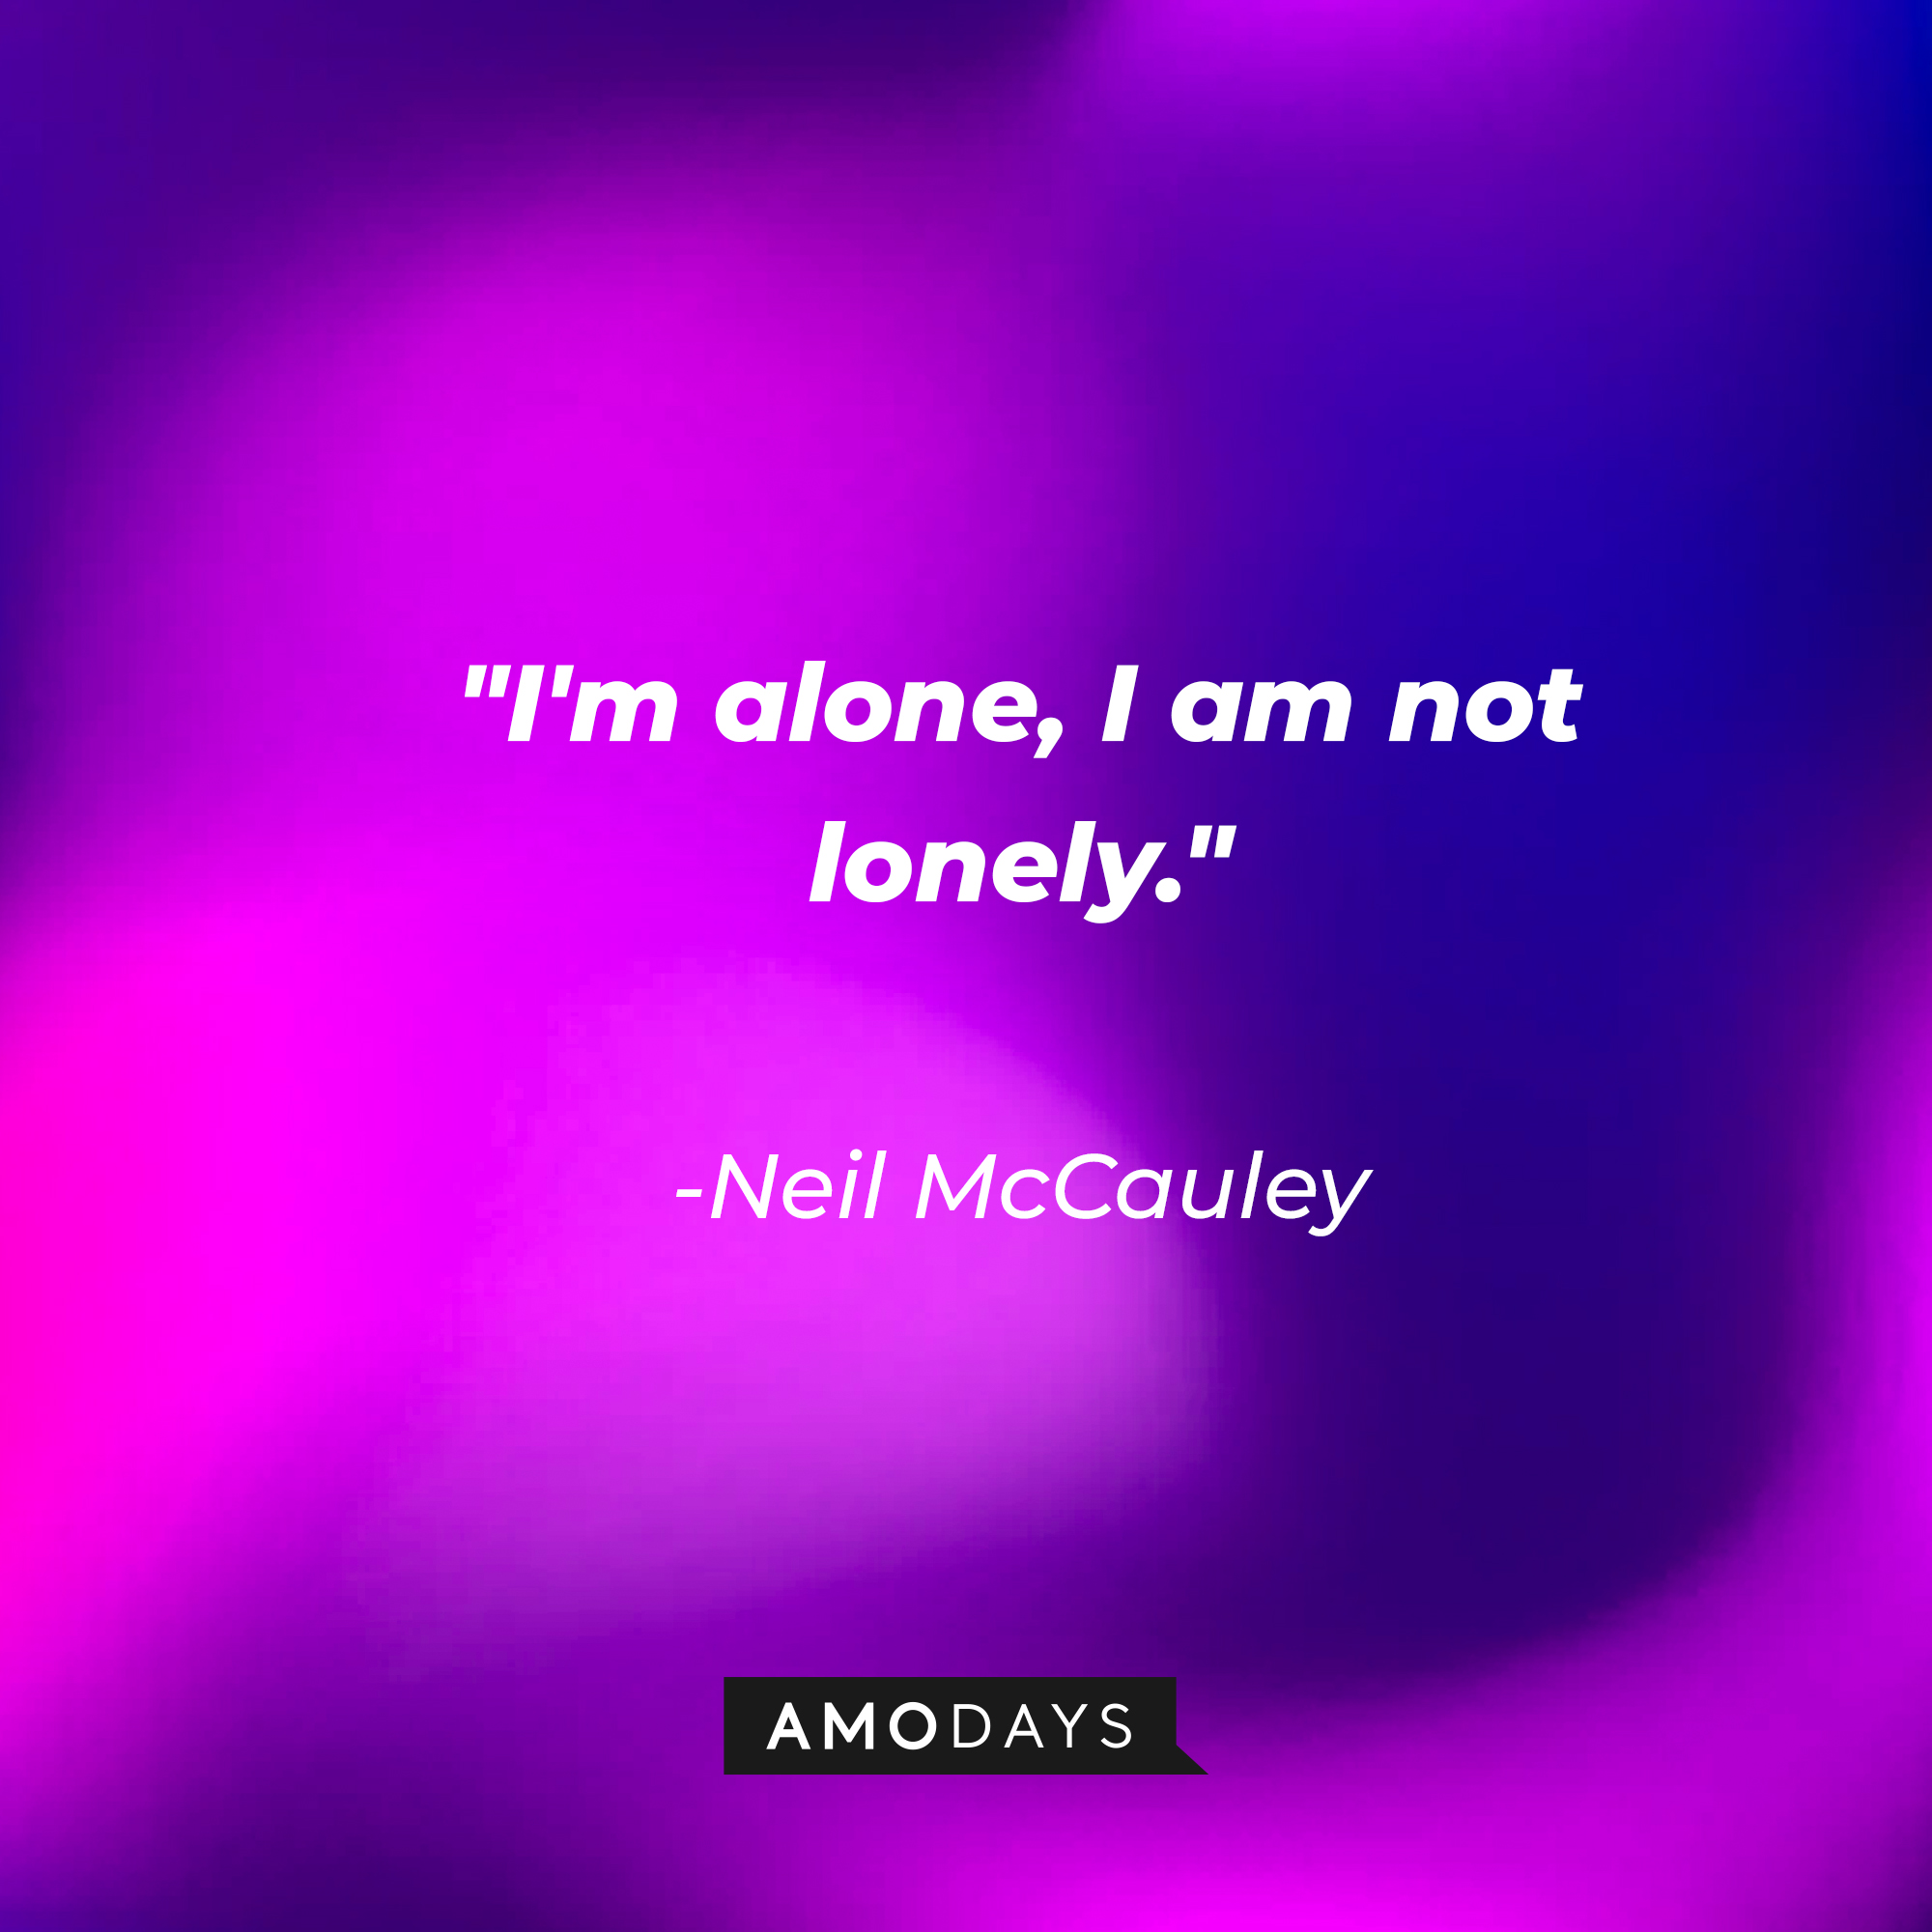 Neil McCauley's quote: "I'm alone, I am not lonely." | Source: AmoDays